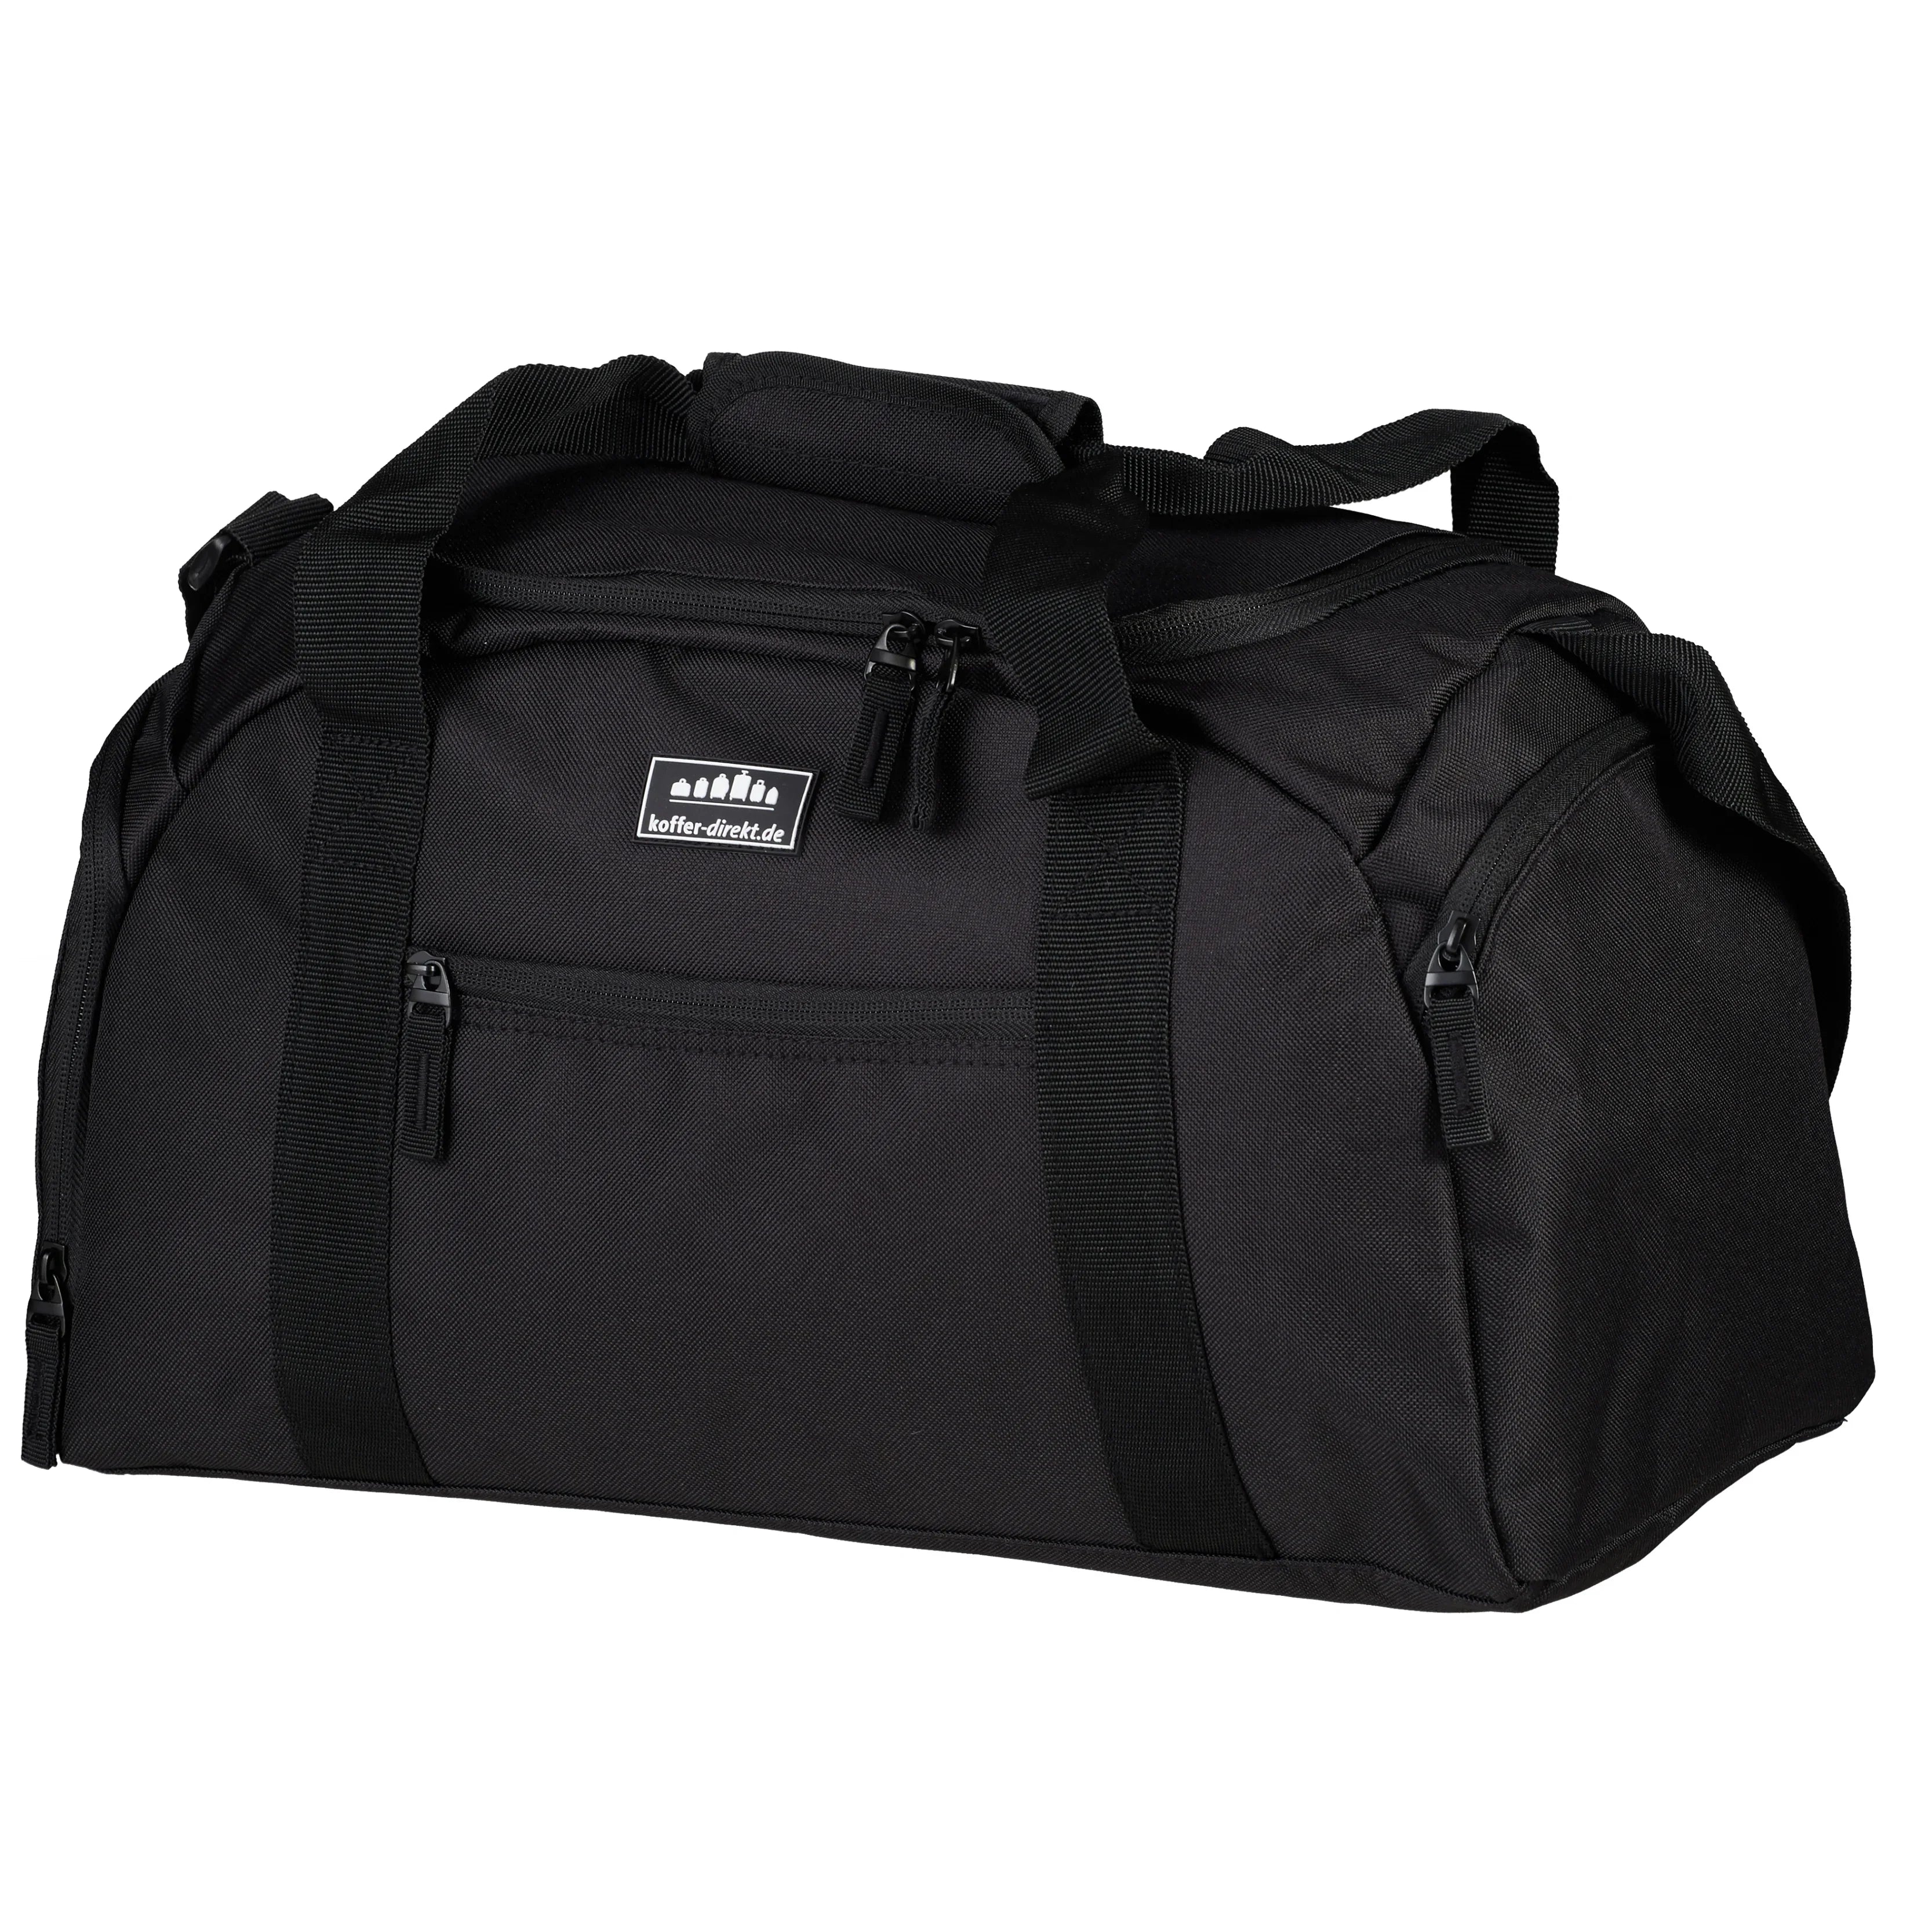 koffer-direkt.de Light Travel II Travel bag 46 cm - black